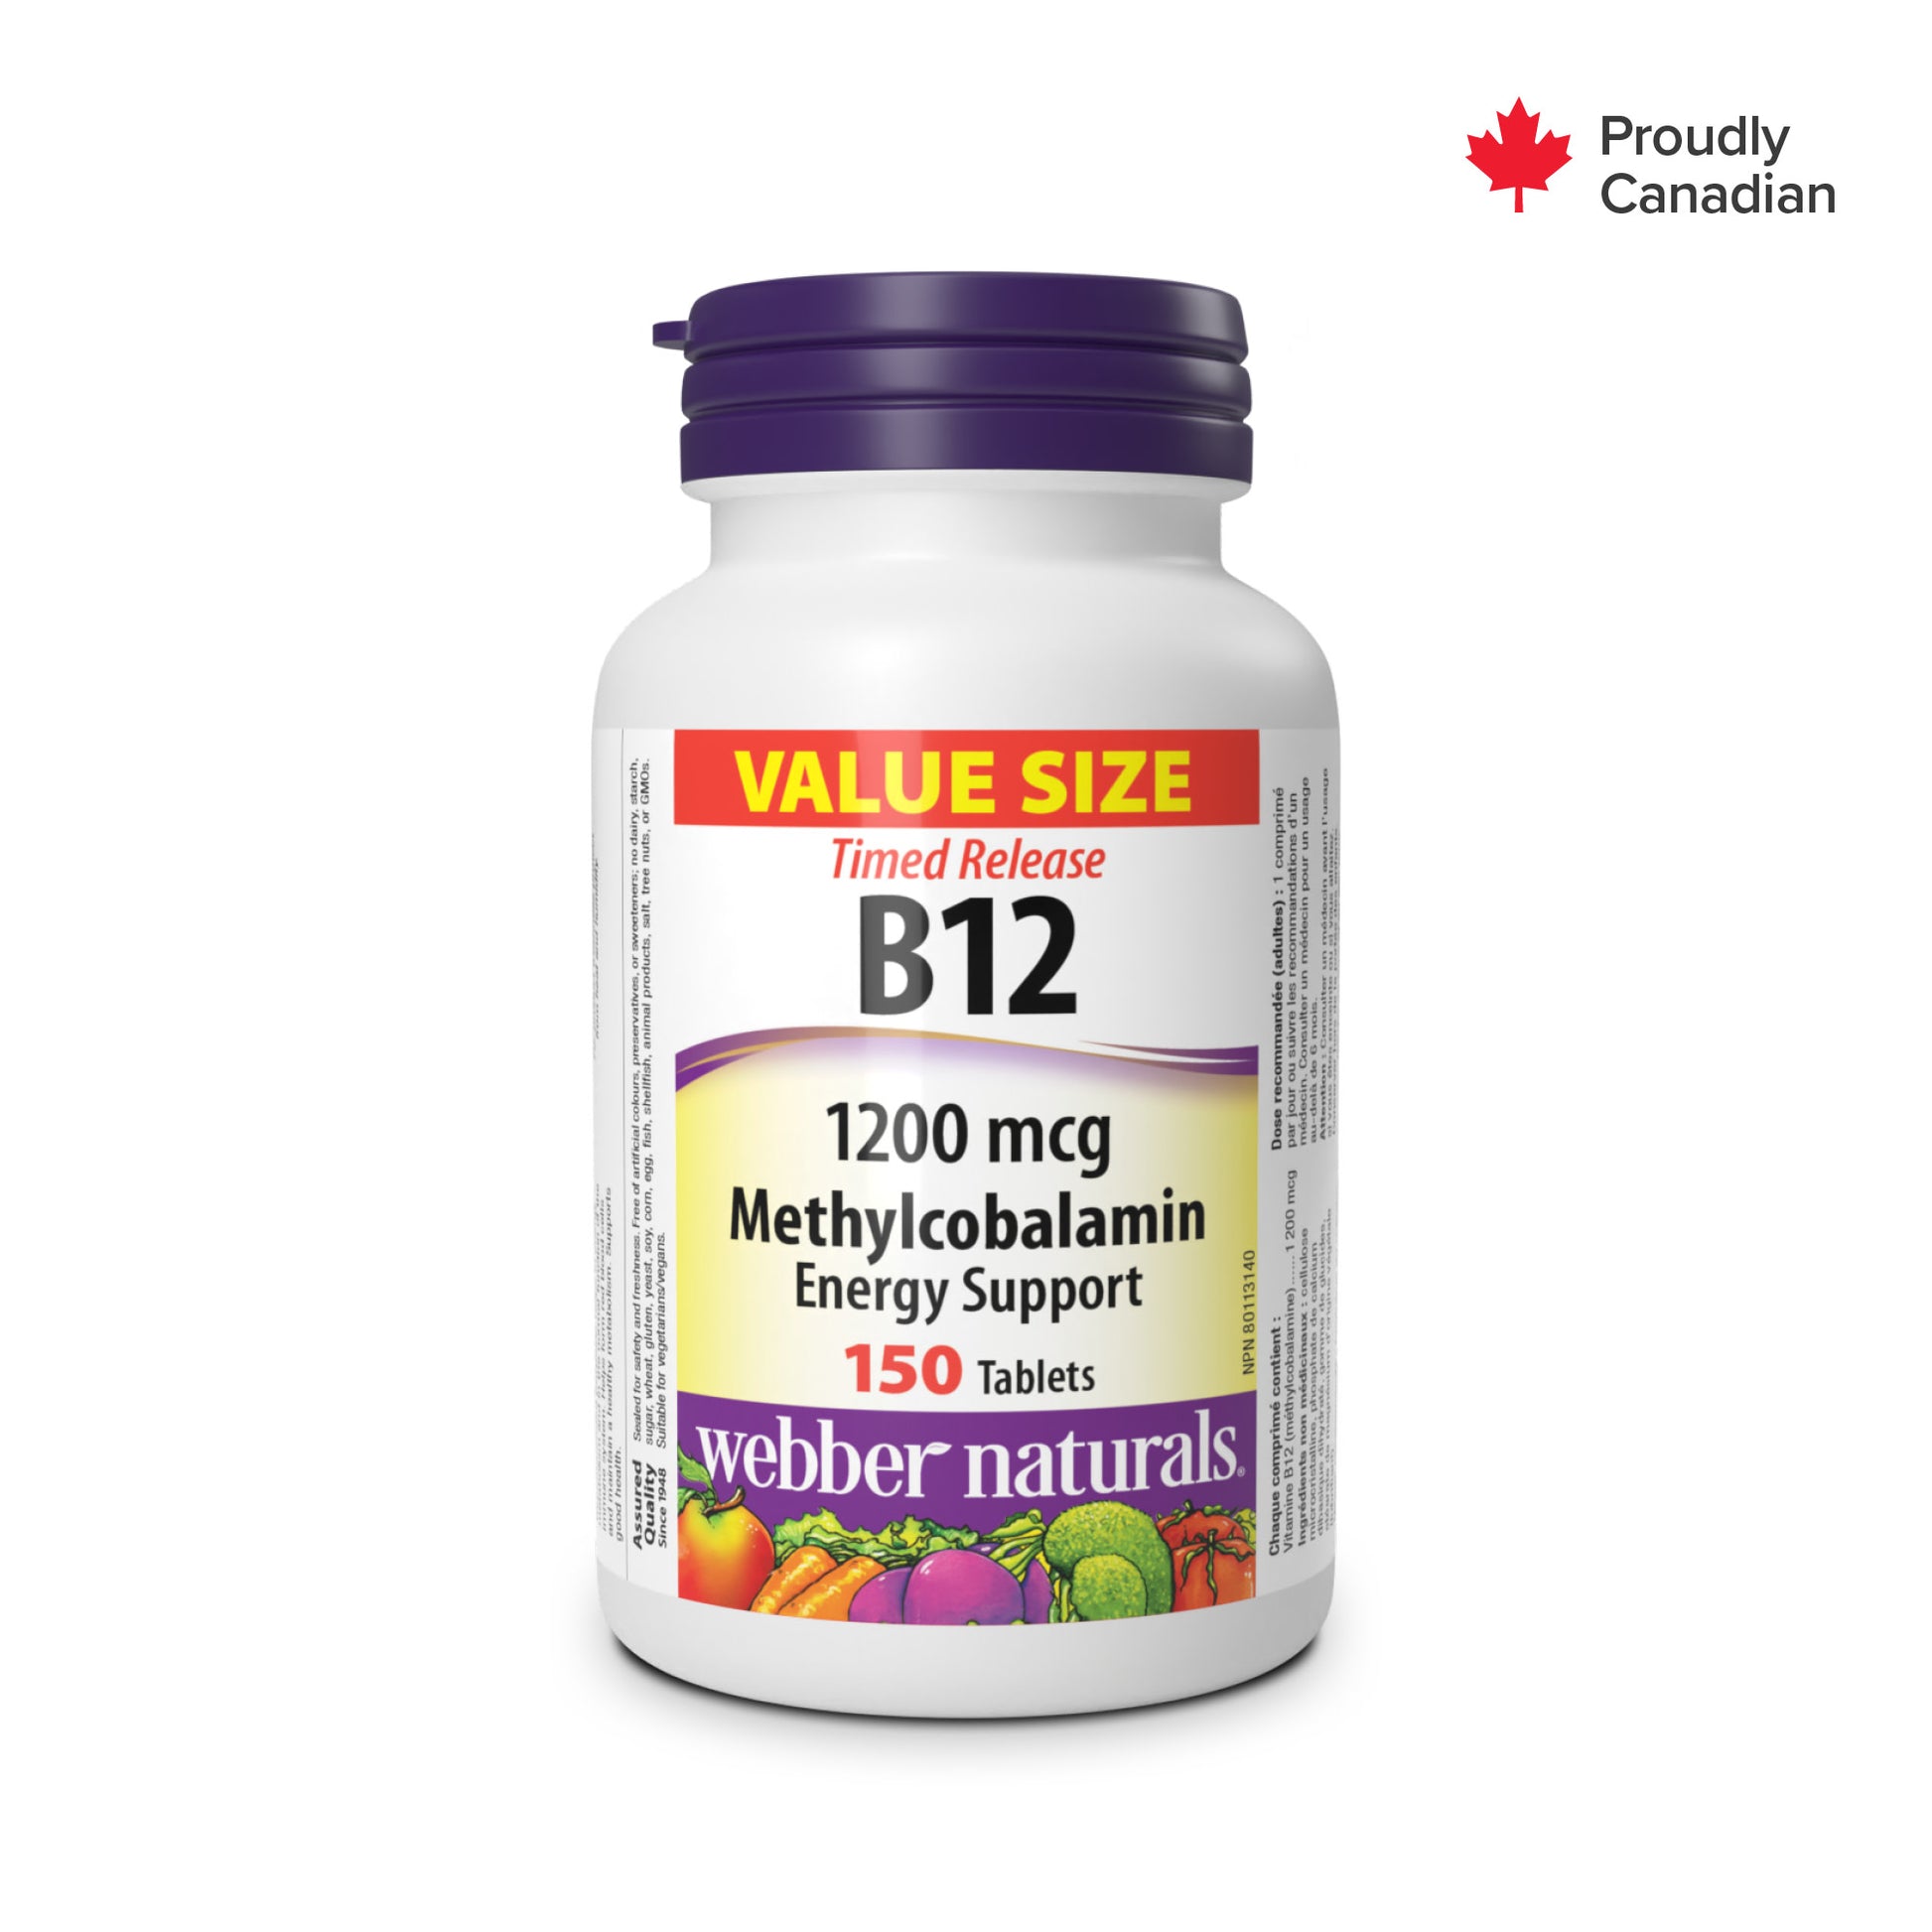 Vitamine B12 à libération lente for Webber Naturals|v|hi-res|WN3924